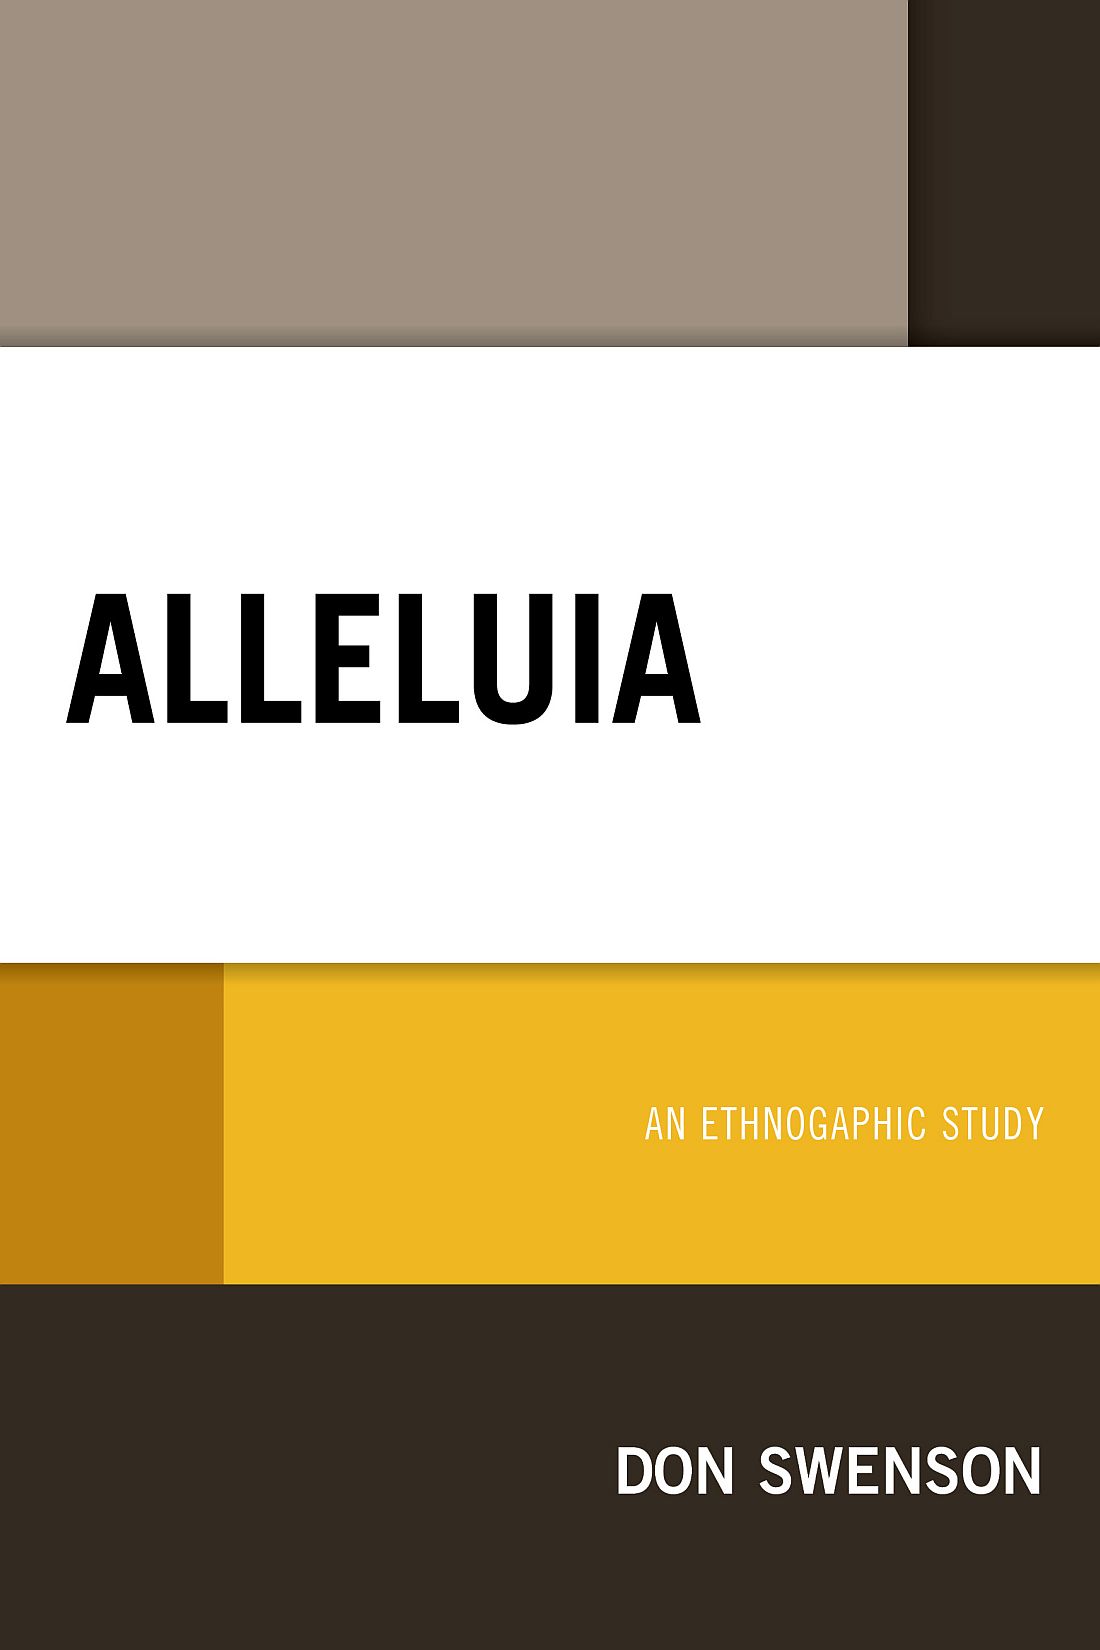 Alleluia Alleluia An Ethnographic Study Don Swenson LEXINGTON BOOKS Lanham - photo 1